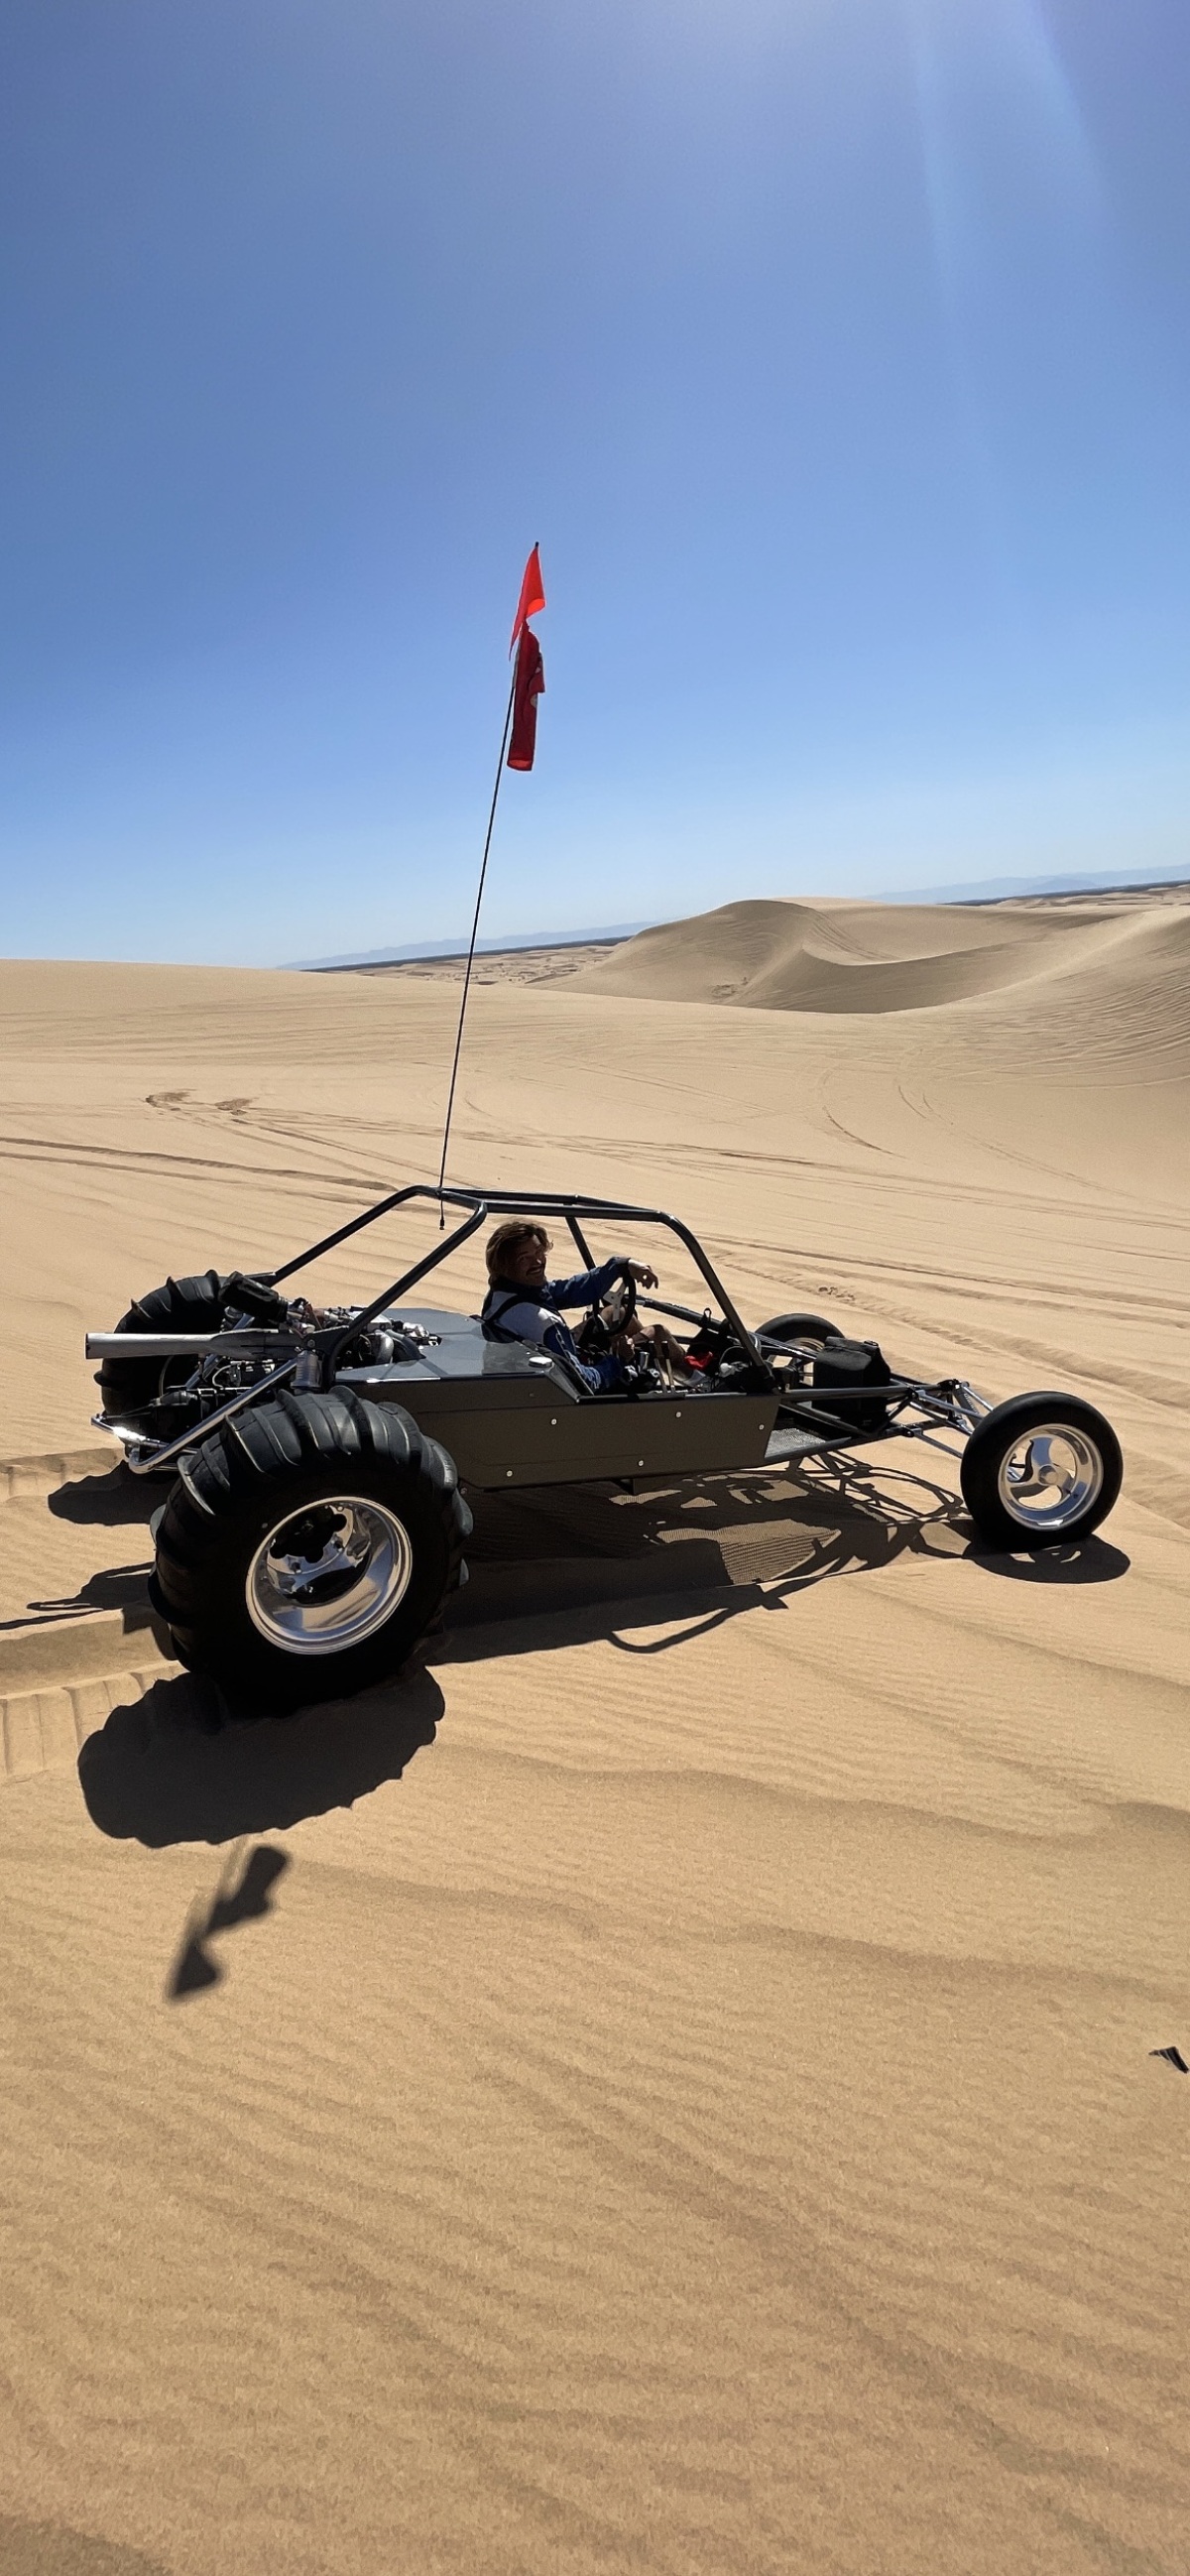 For Sale: Mazzone 2 seater Sand Car w Subaru power a true Classic Duner FASSSSTTT - photo0